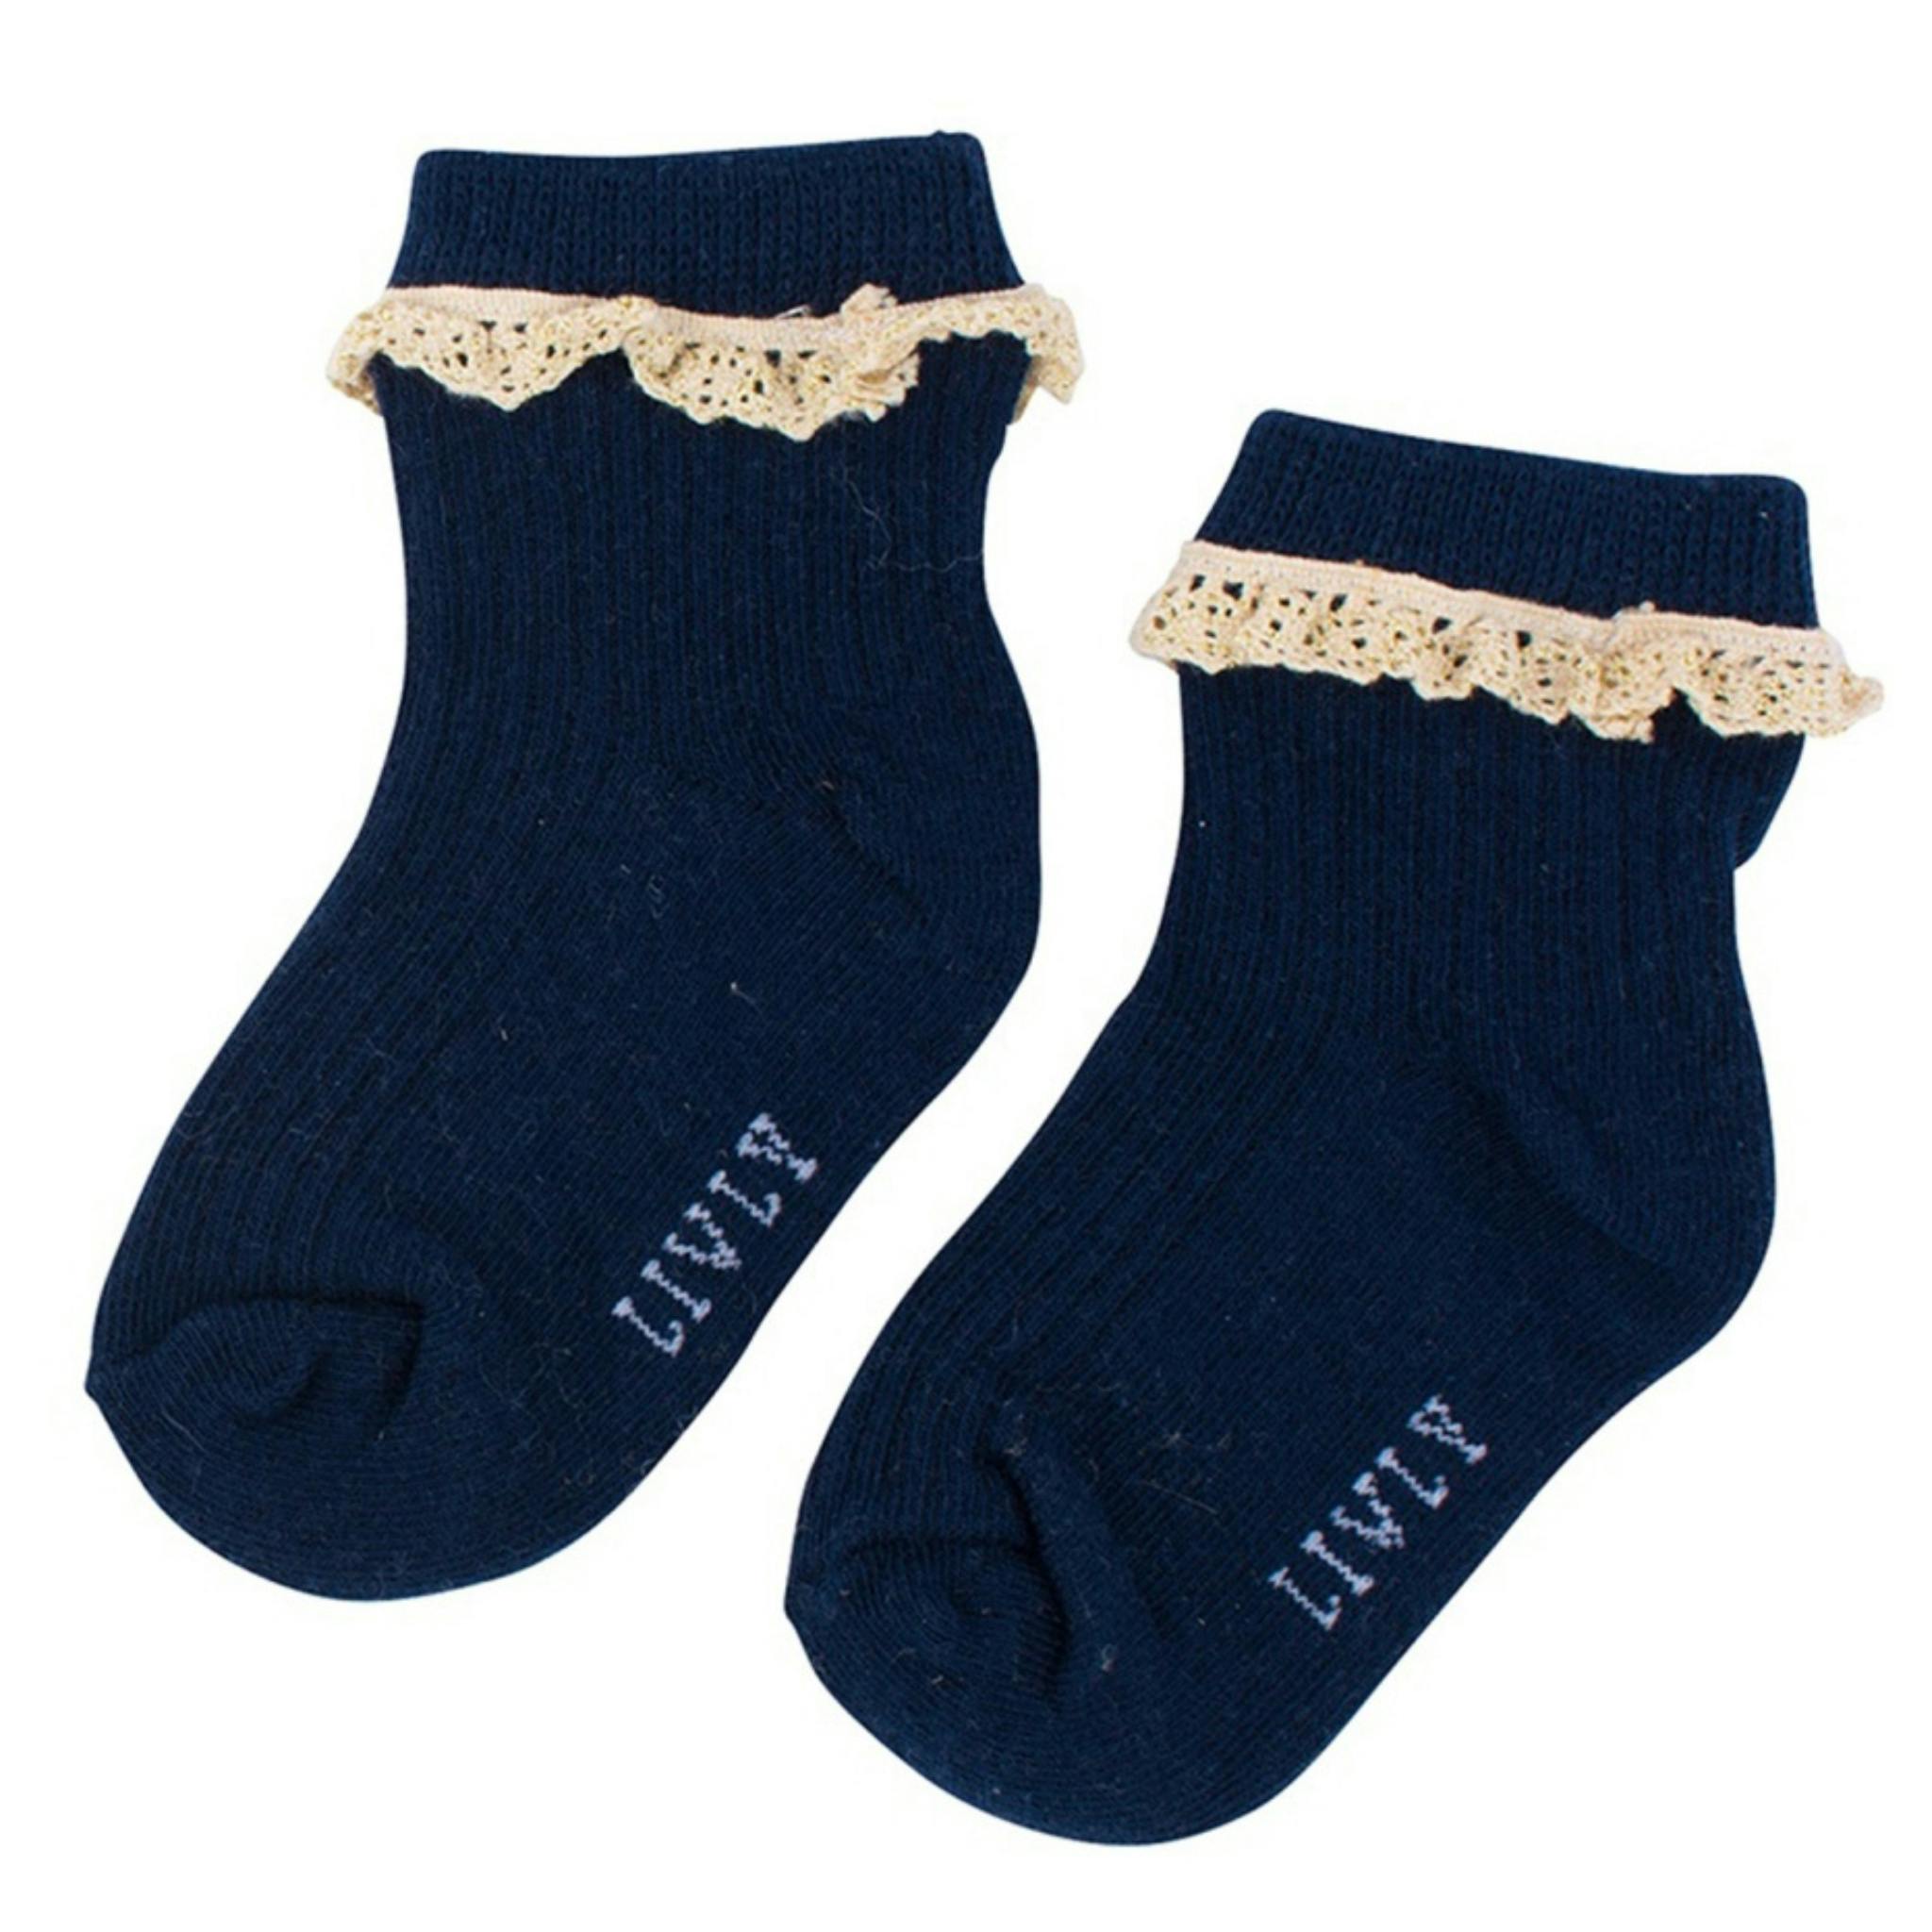 Strumpa - Lace socks navy